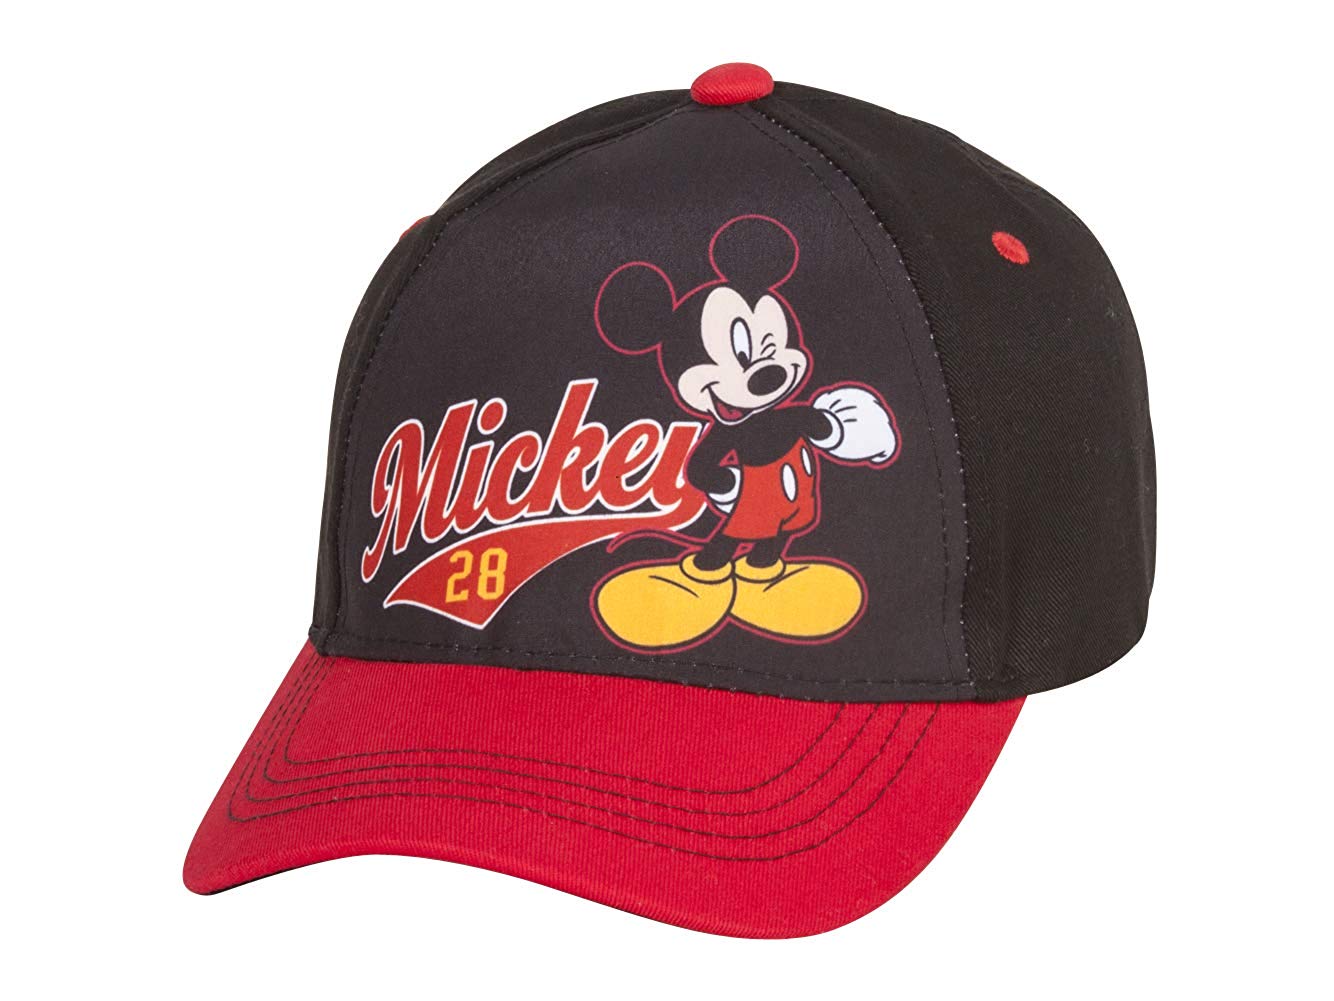 Red and Black Disney Logo - Amazon.com: Disney Mickey Mouse 